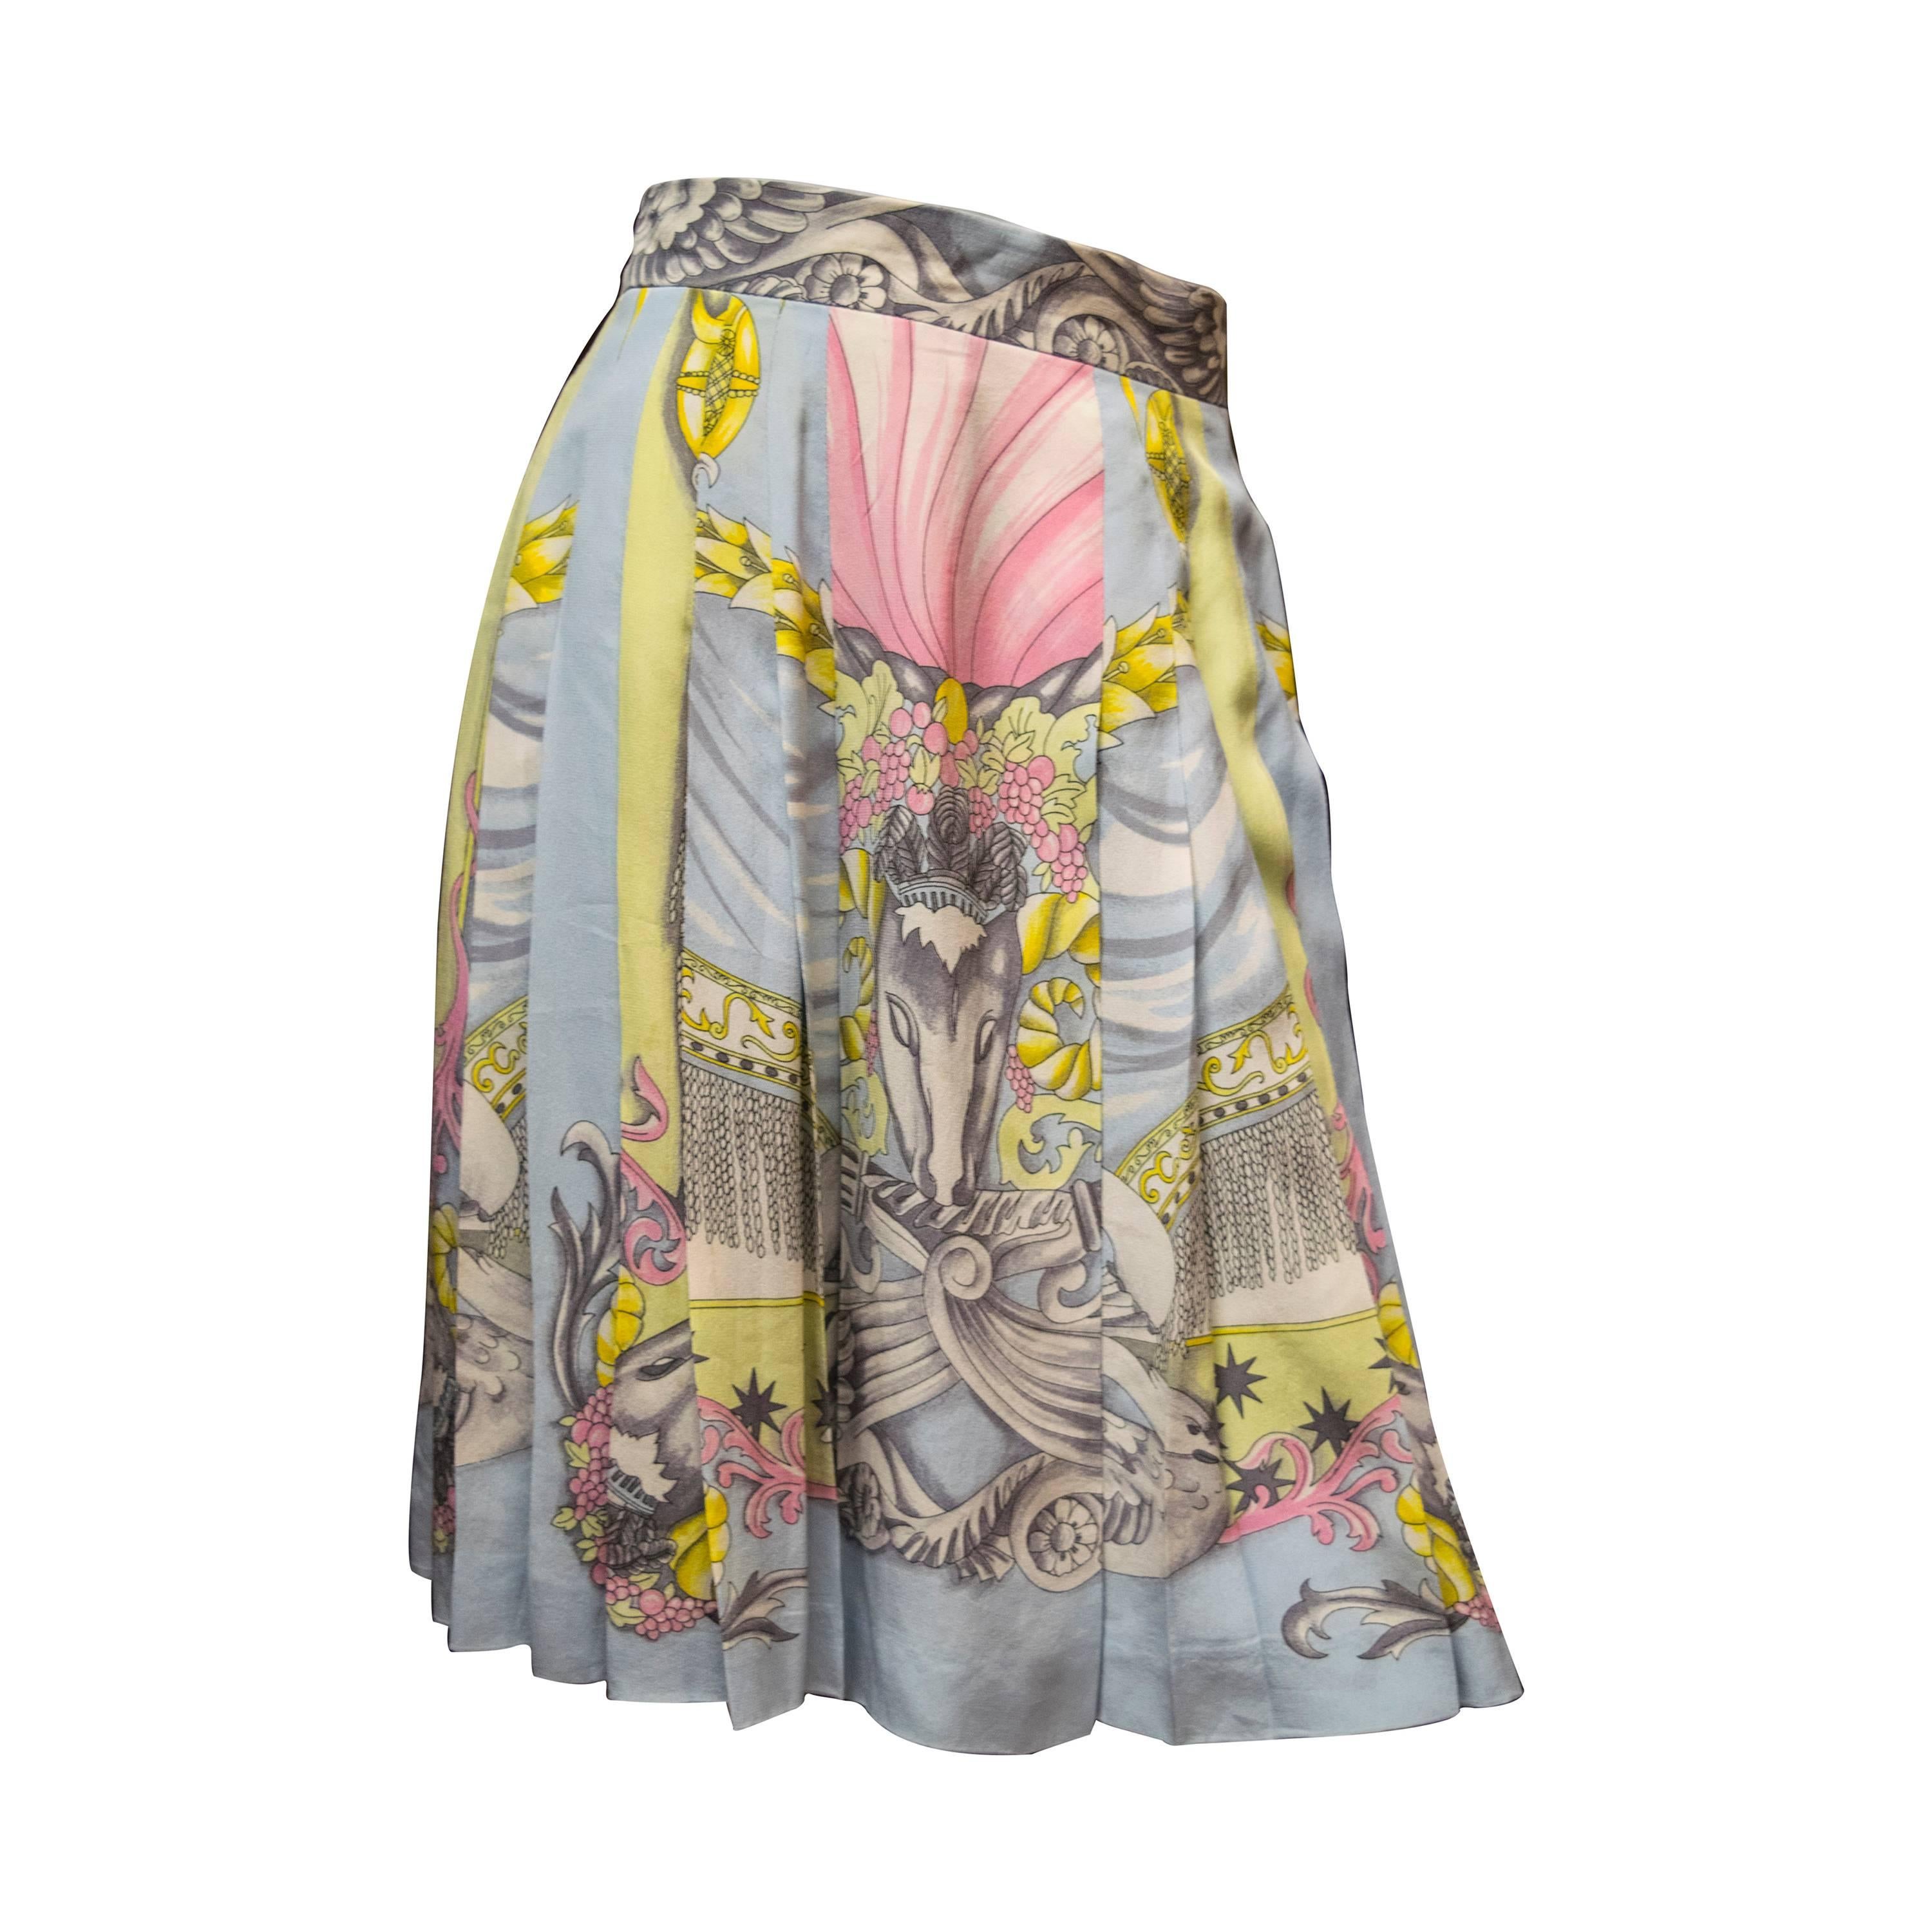 Giani Versace for Laurel Printed Skirt 